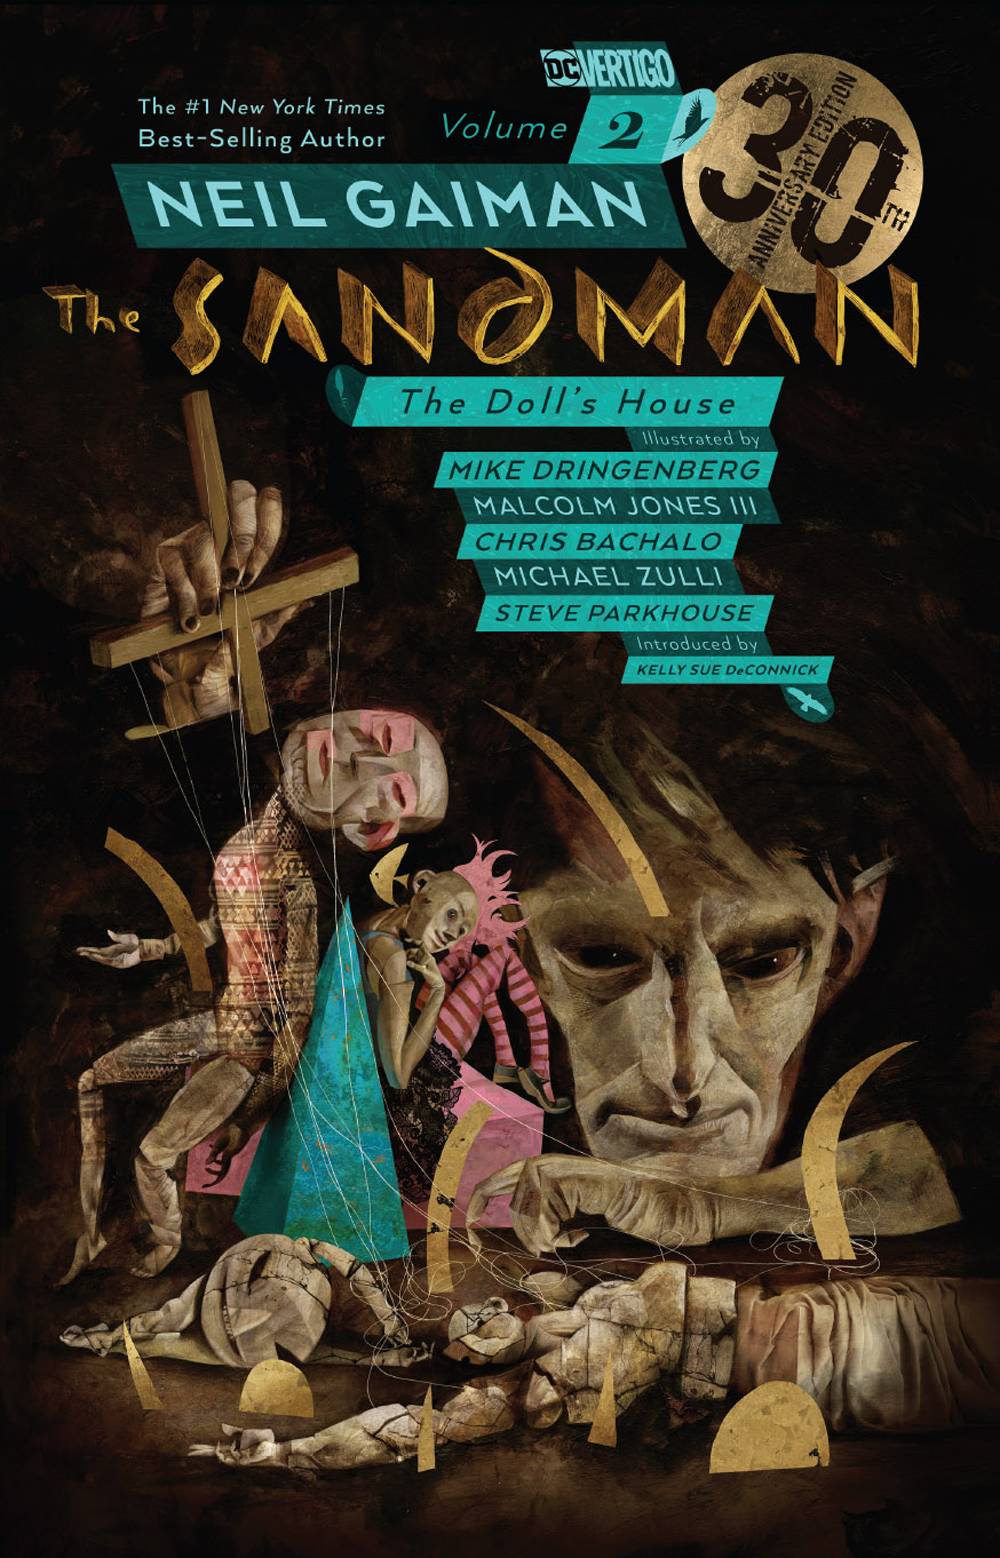 Sandman vol 2: The Doll's House (30th Anniversary Ed'n)